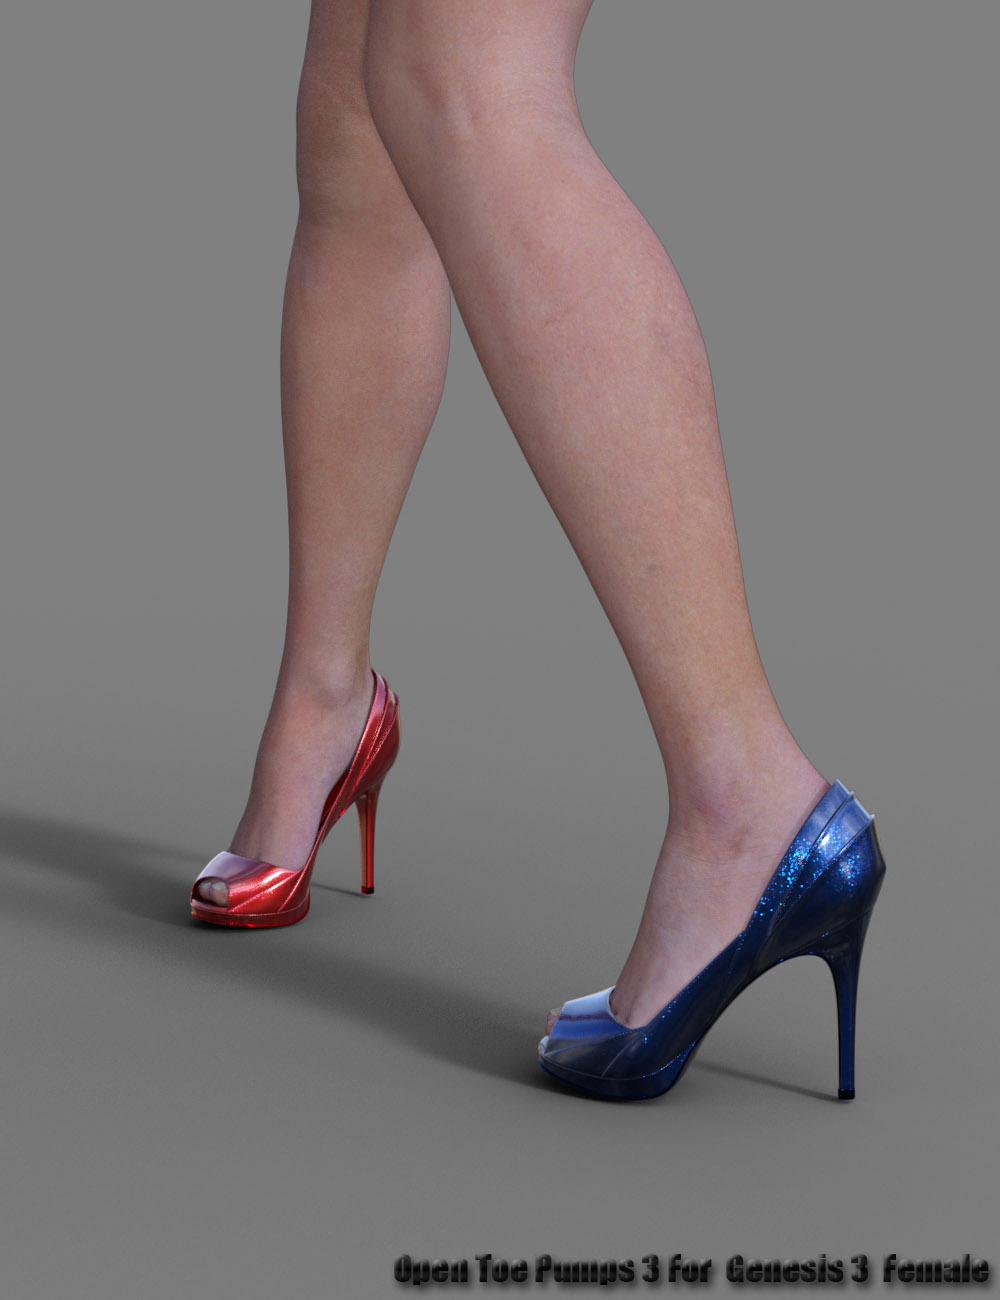 Open Toe Pumps 3 for Genesis 3 Female(s) by: dx30, 3D Models by Daz 3D